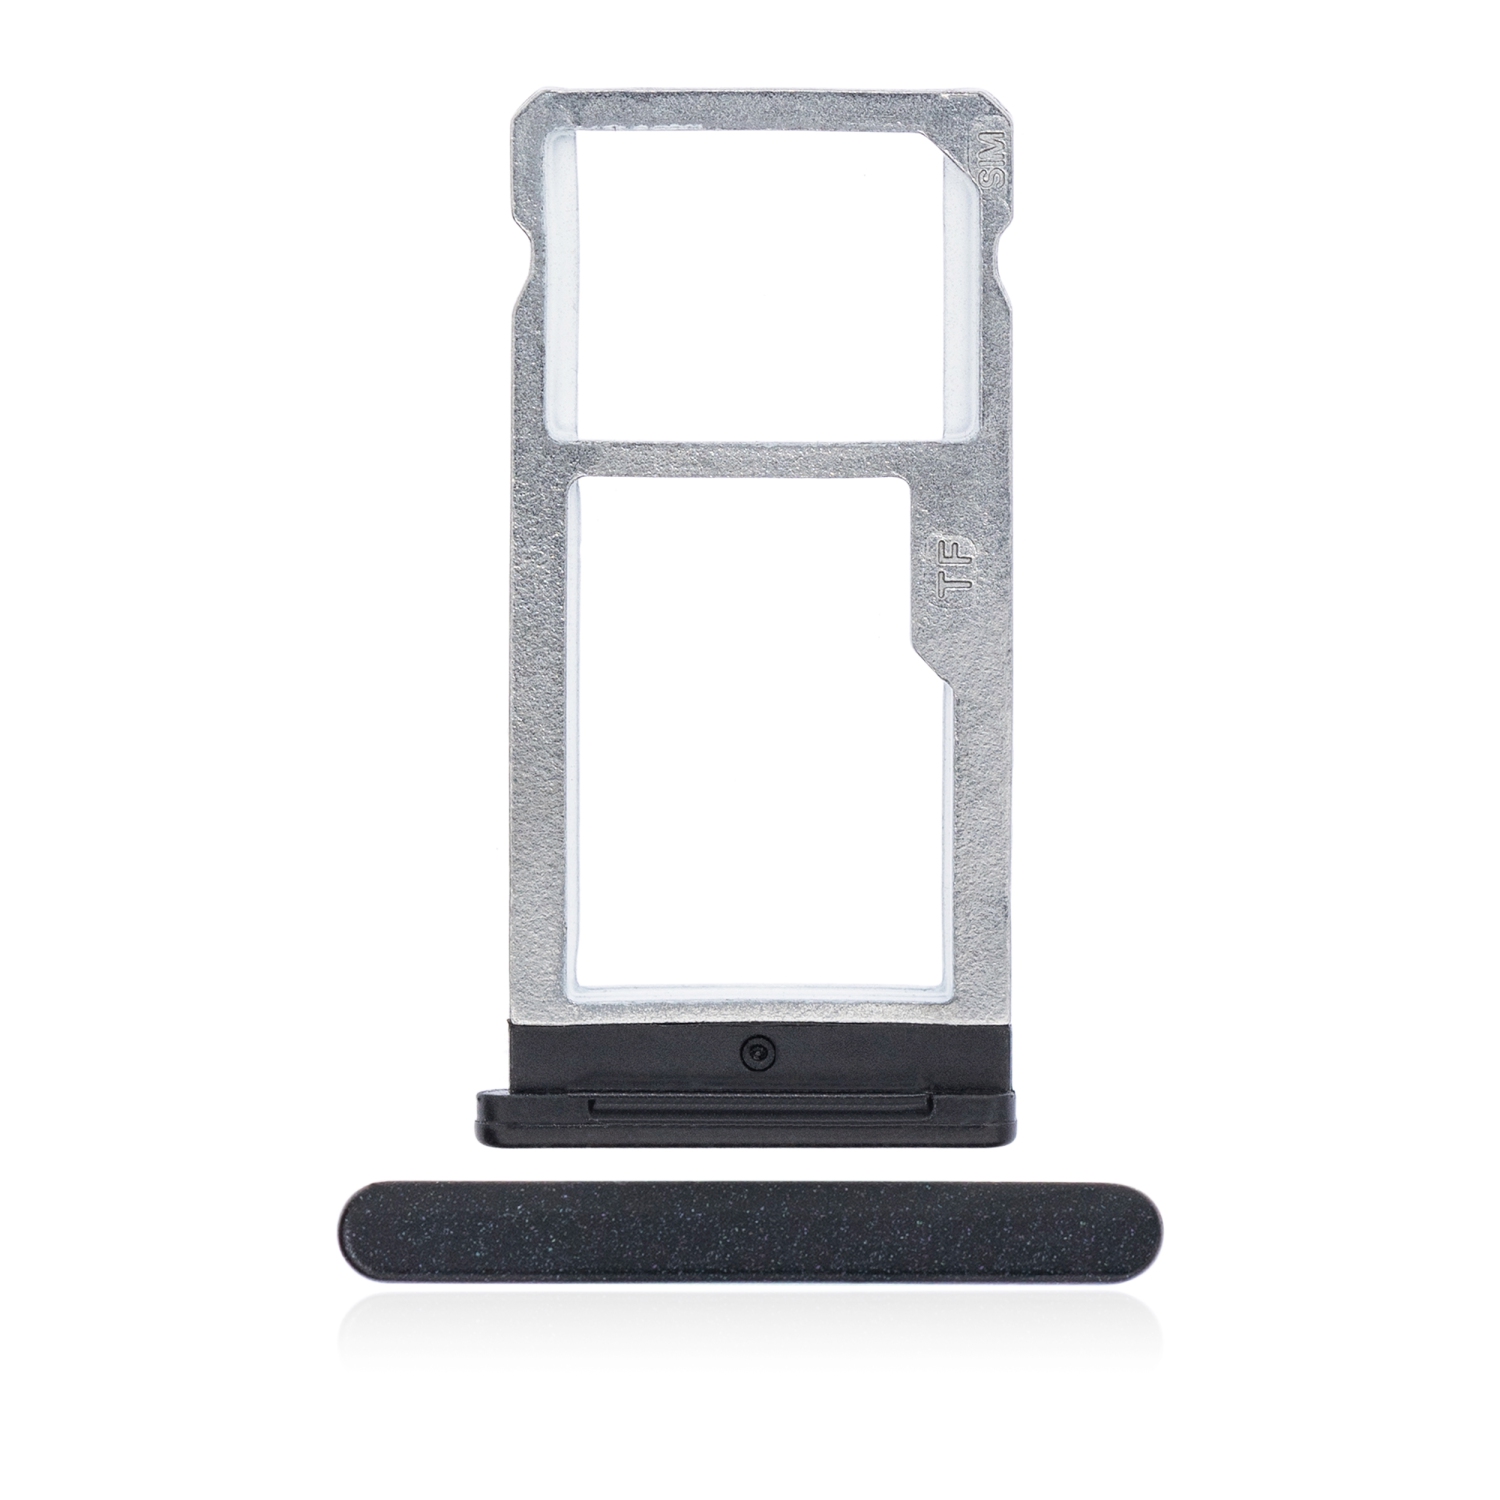 Replacement Single Sim Card Tray Compatible For T-Mobile Revvl Plus (C3701A) (Black)